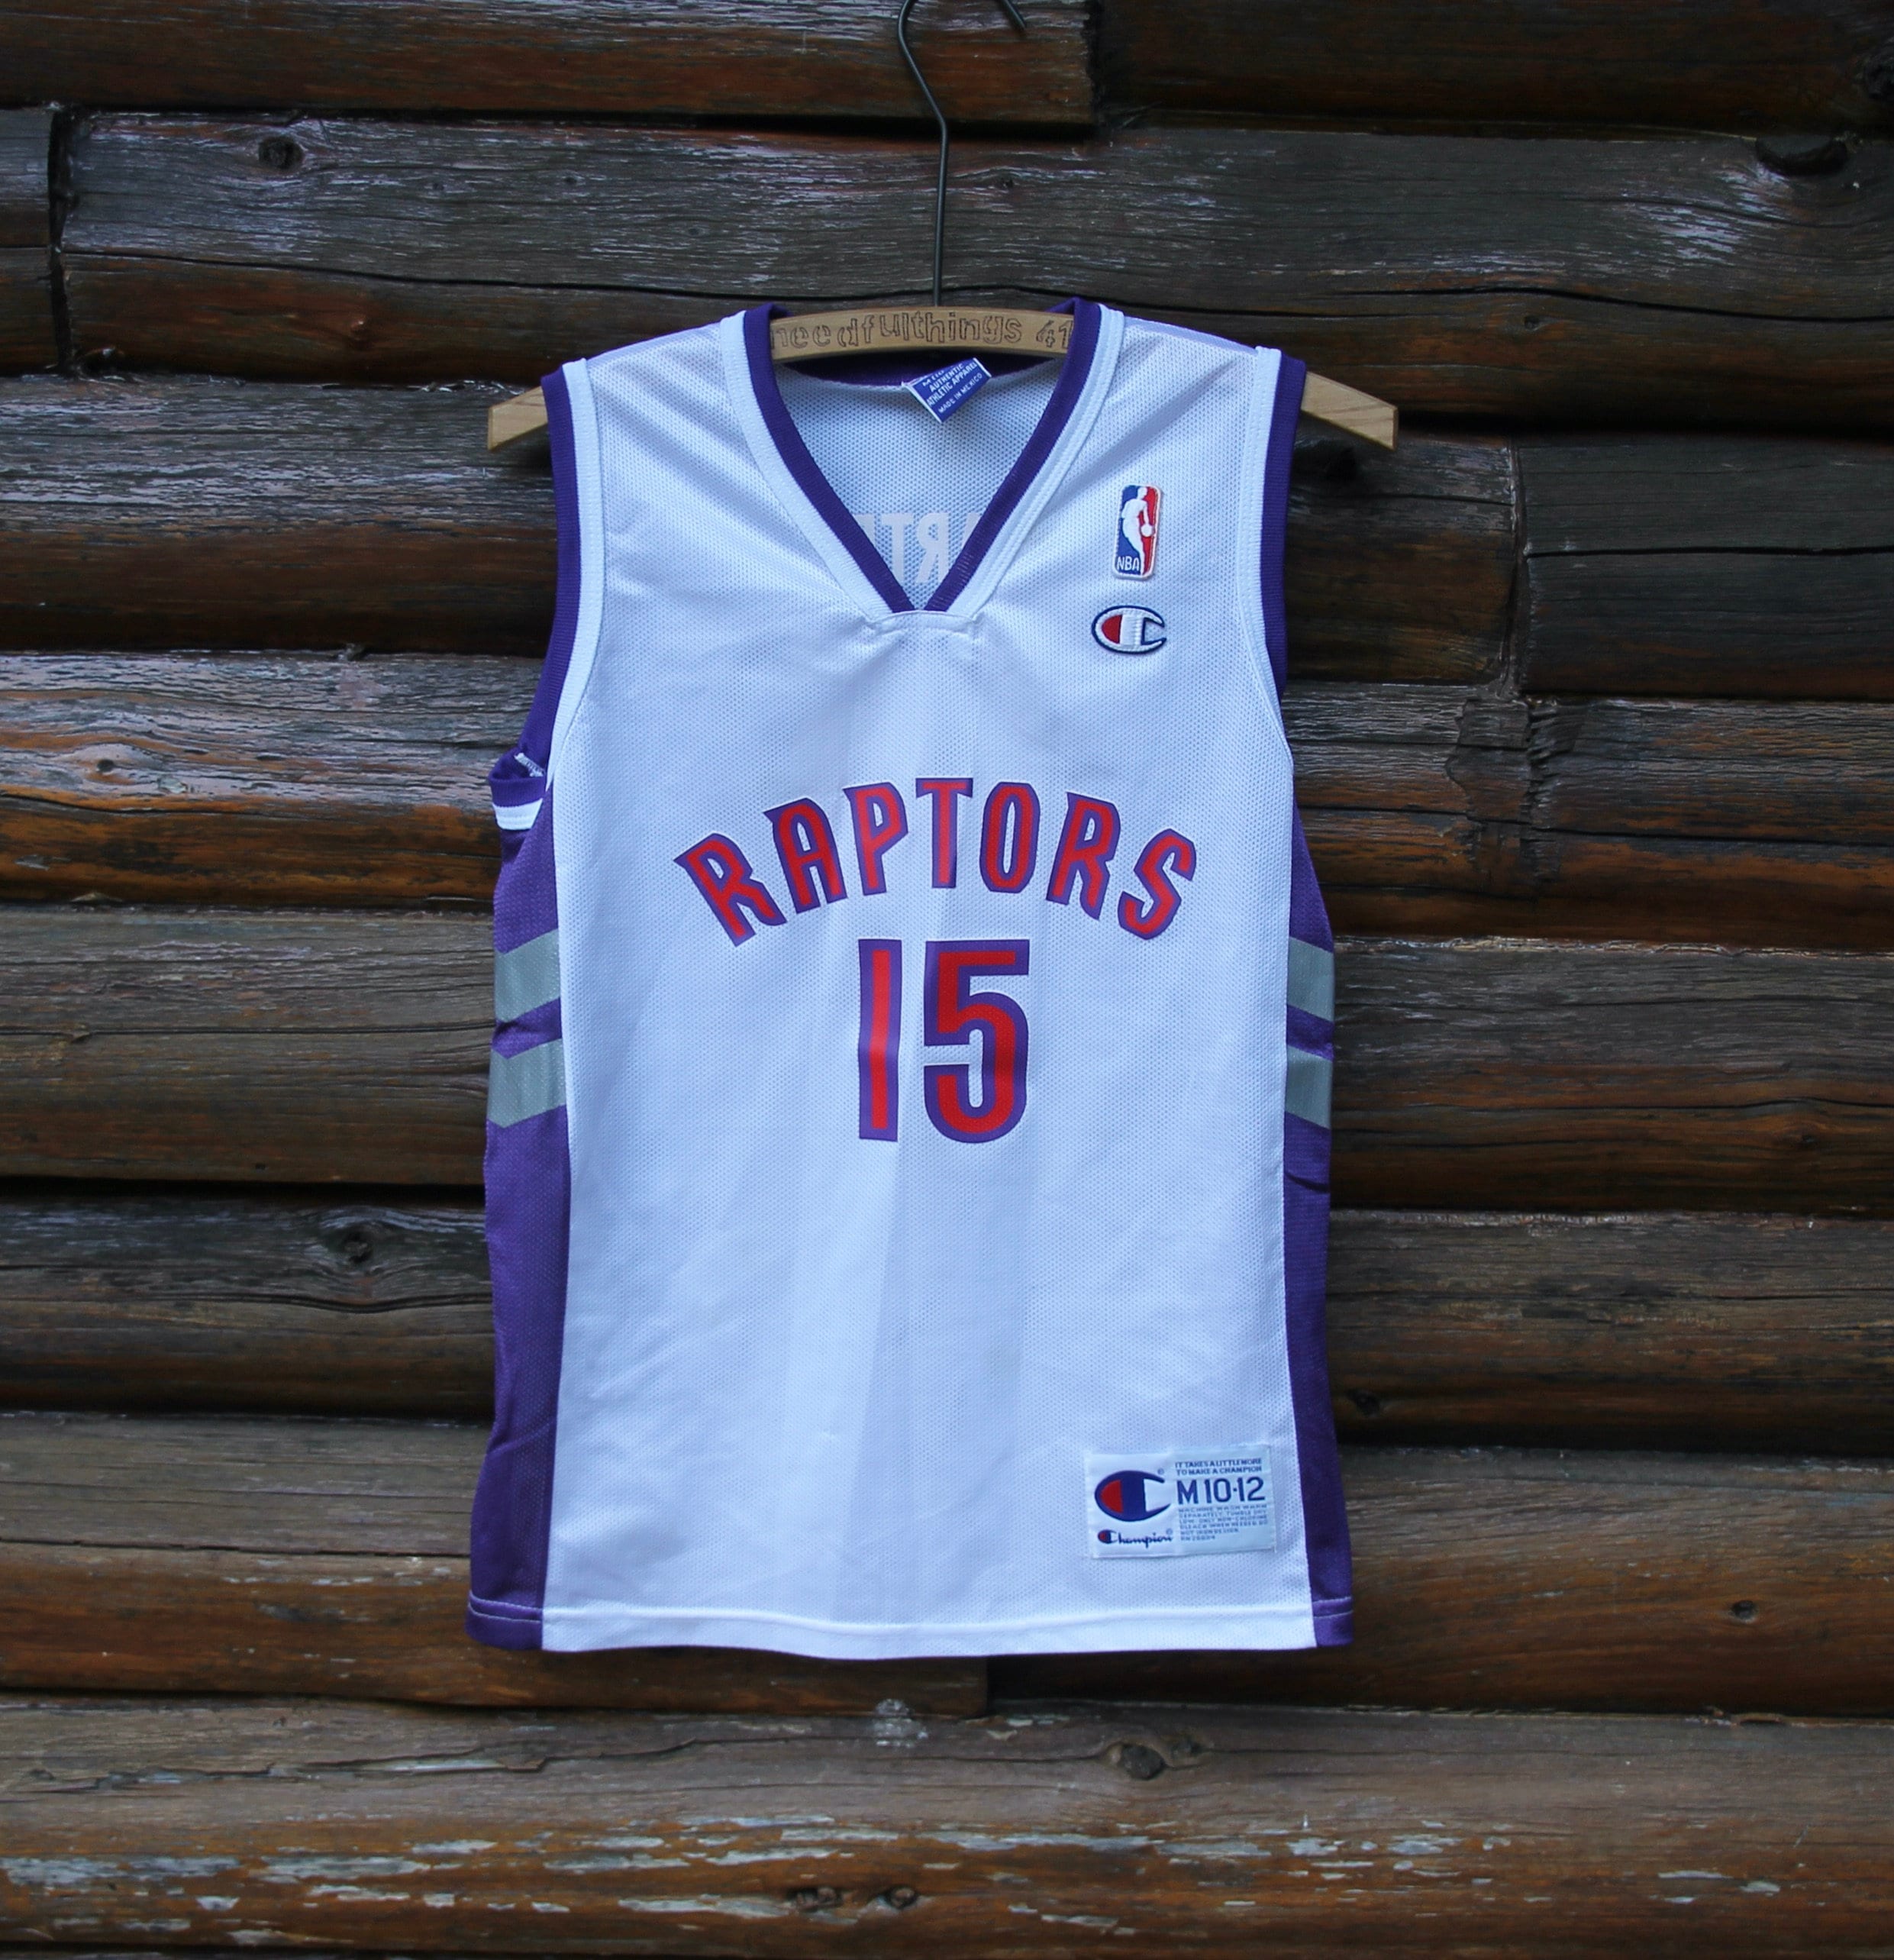 NeedfulThings416 Vintage Toronto Raptors Jerome Williams Champion Youth Kids Size Small 6-8 NBA Basketball Jersey